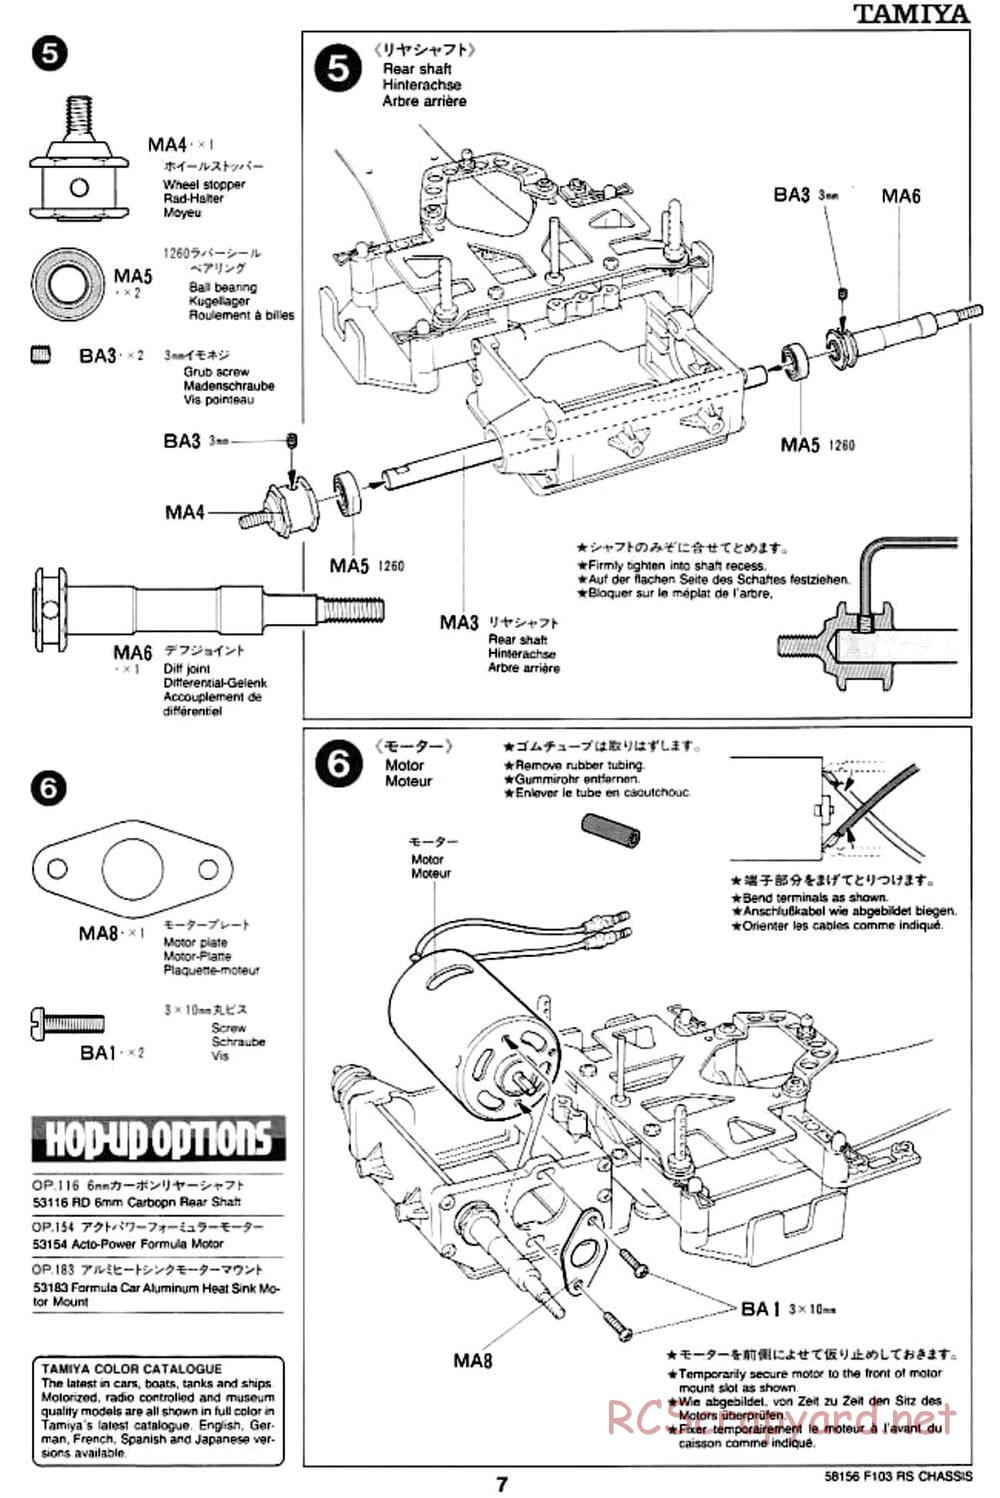 Tamiya - F103RS Chassis - Manual - Page 7